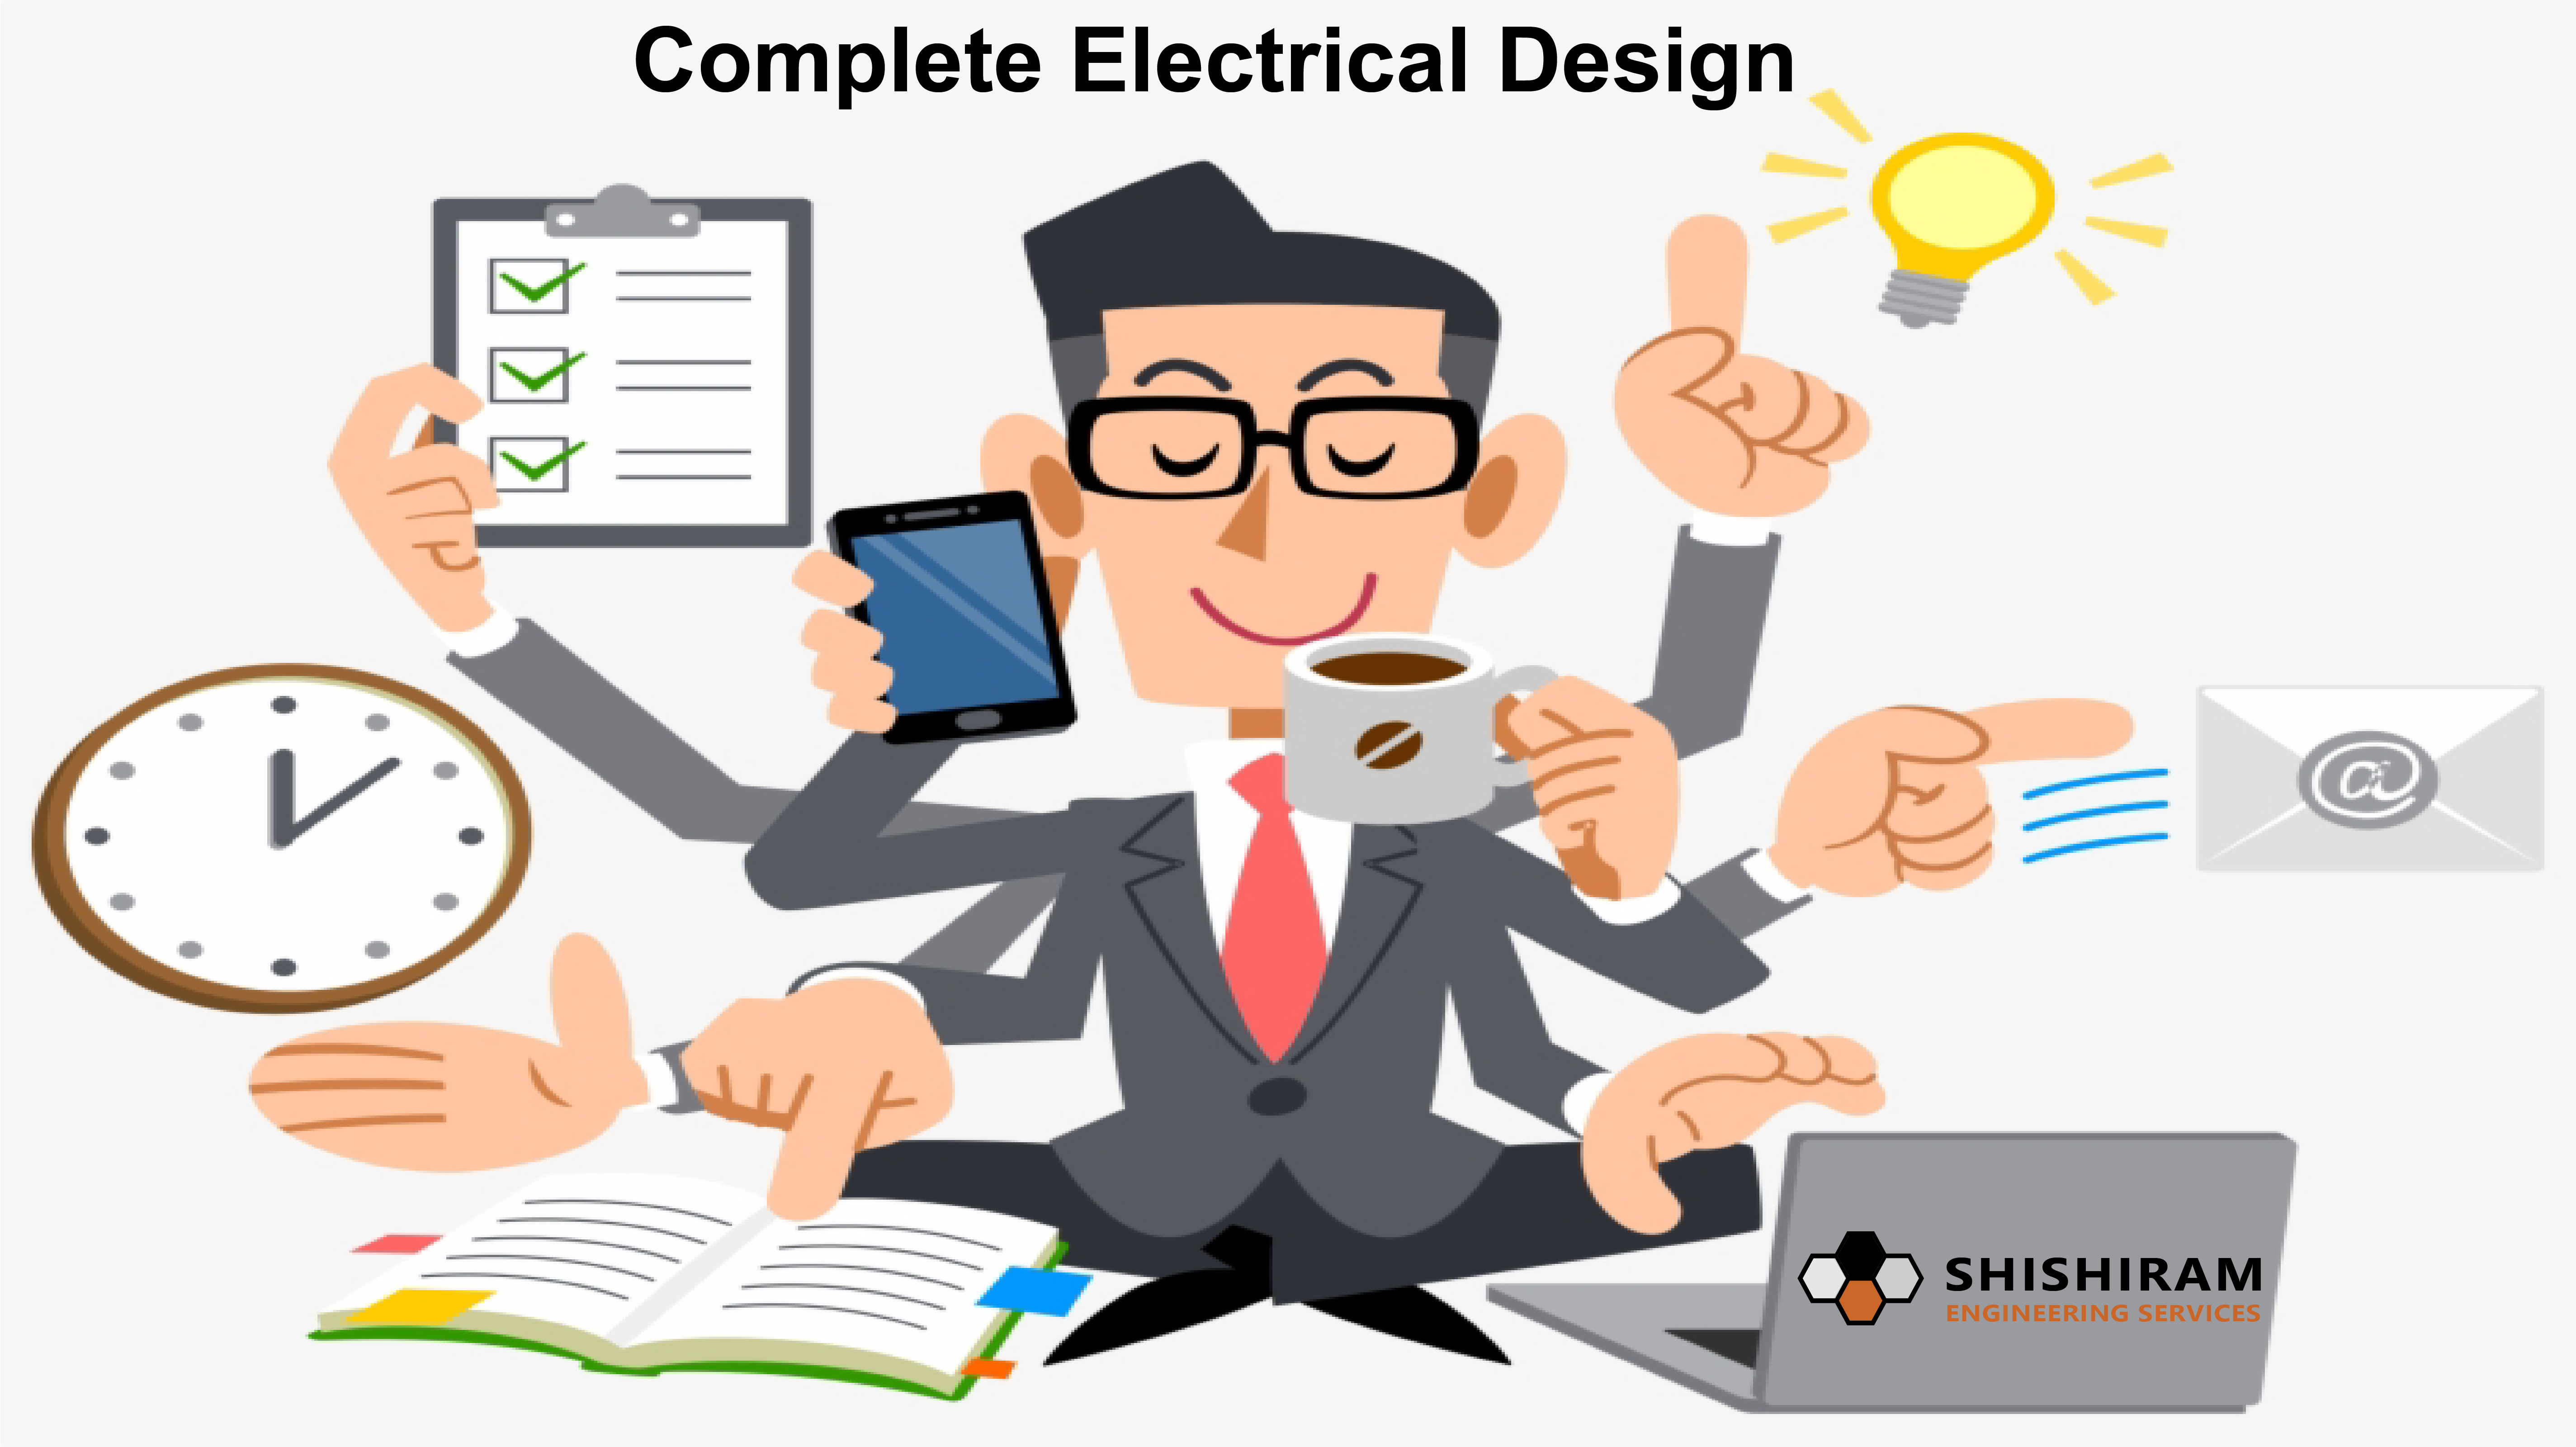 shishiram engineering service complete electrical design